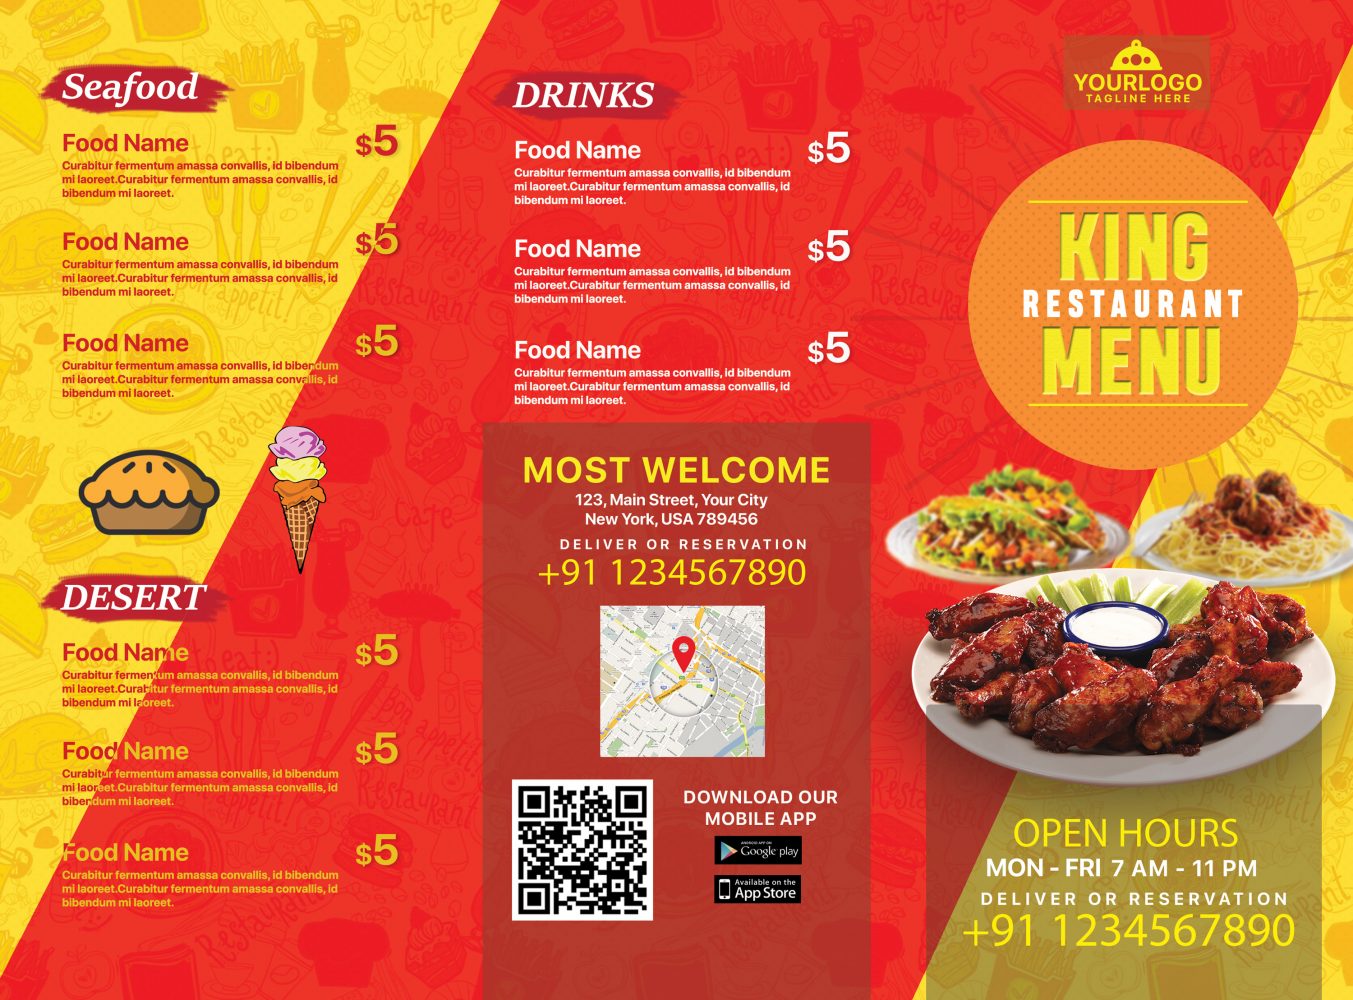 Restaurant menu,menu card,king restaurant menu,broucher,broucher menu,broucher menu card,